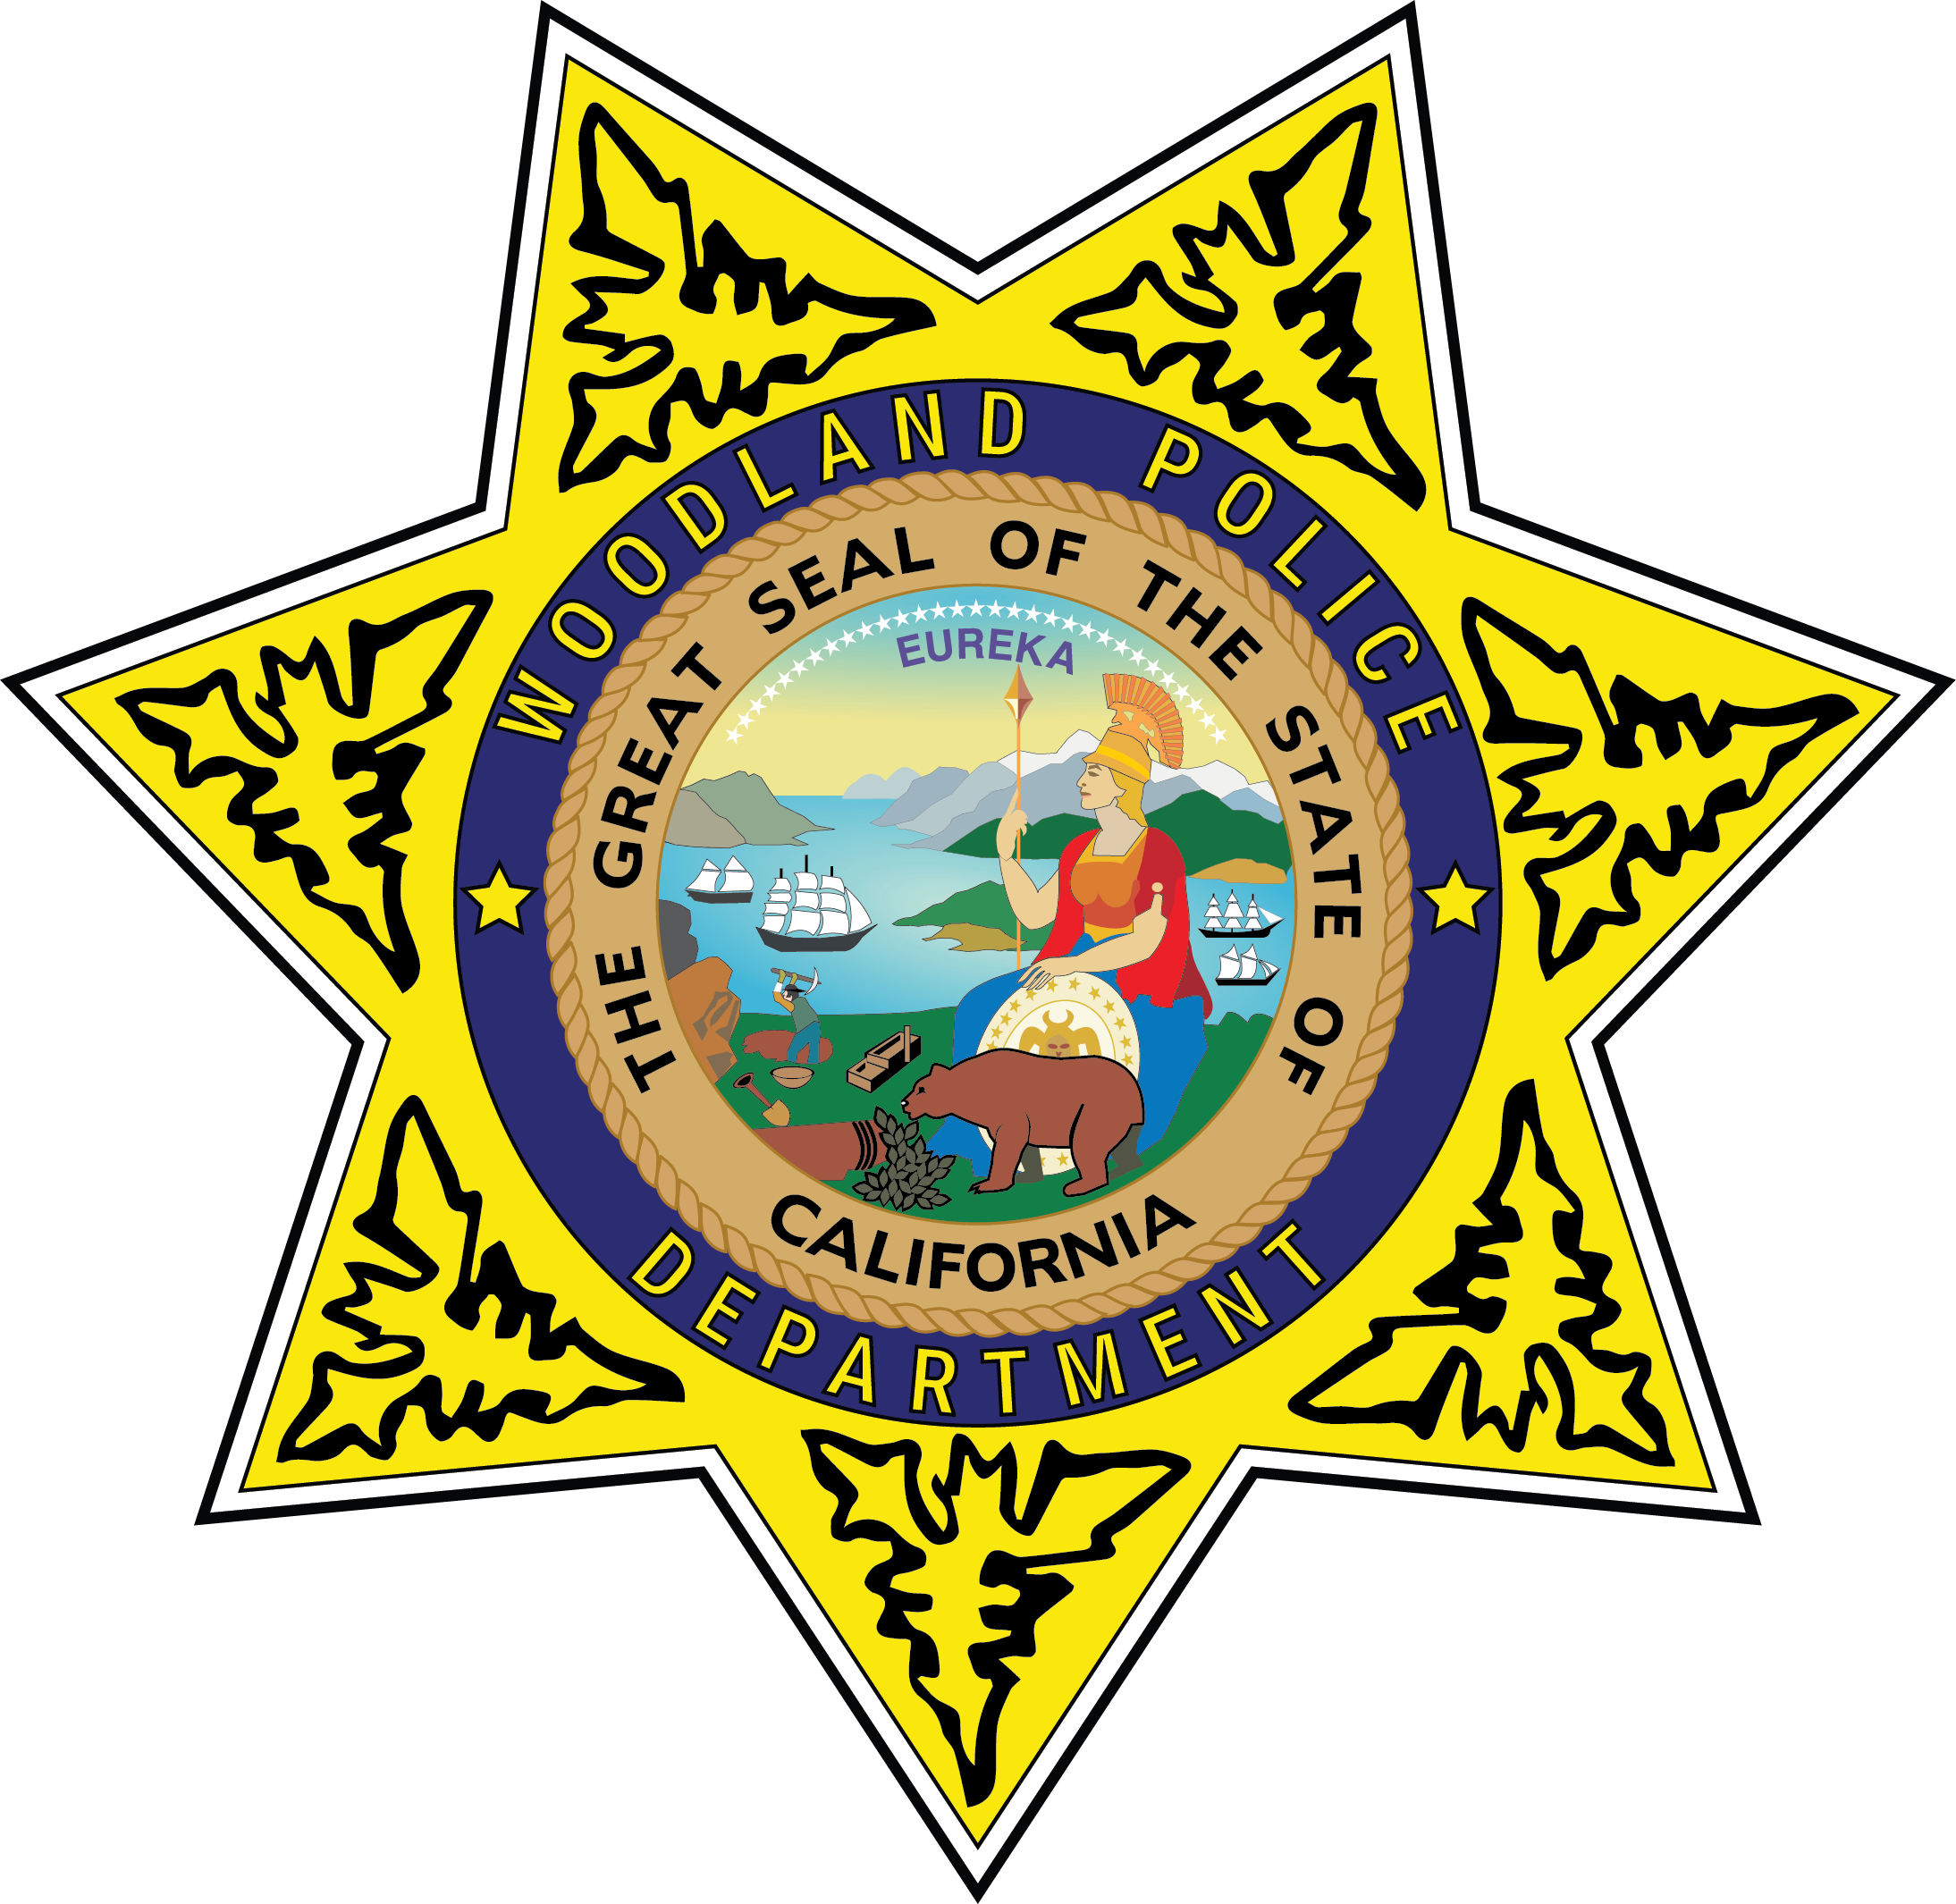 City Of Woodland, California - Santa Cruz County District Attorney (2188x2130)